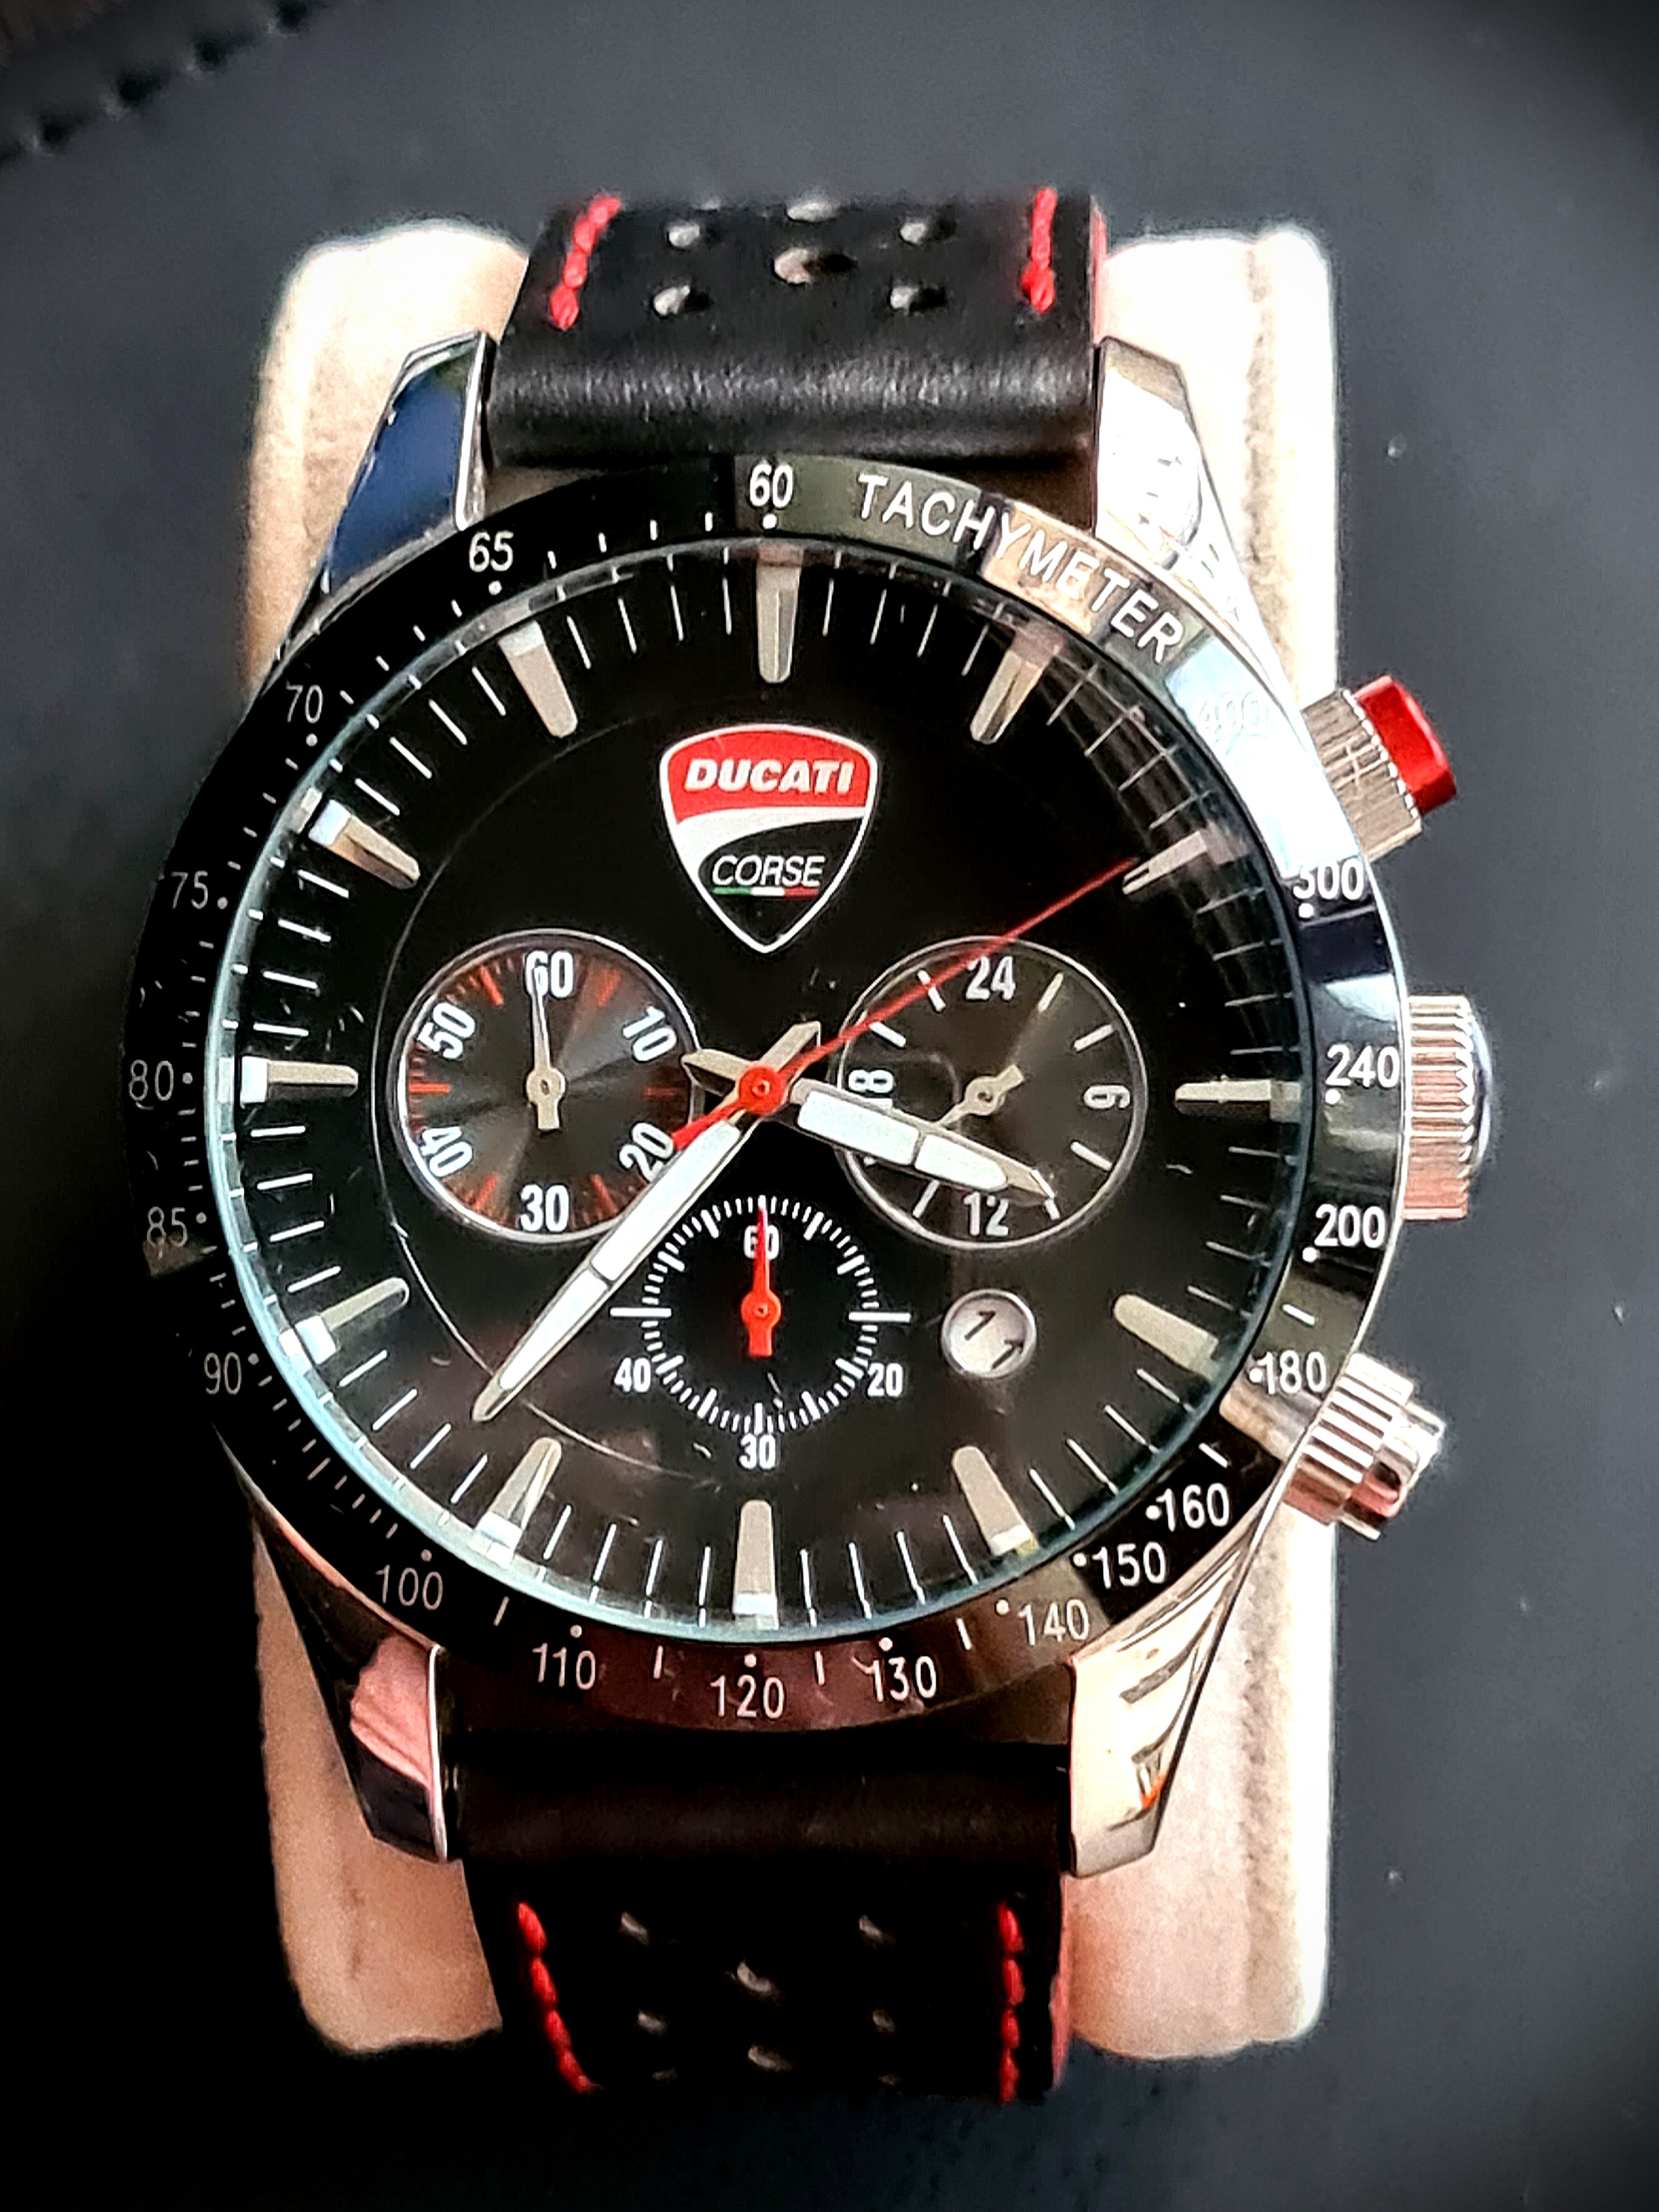 Corse Chronograph Watch Ducati | WatchCharts